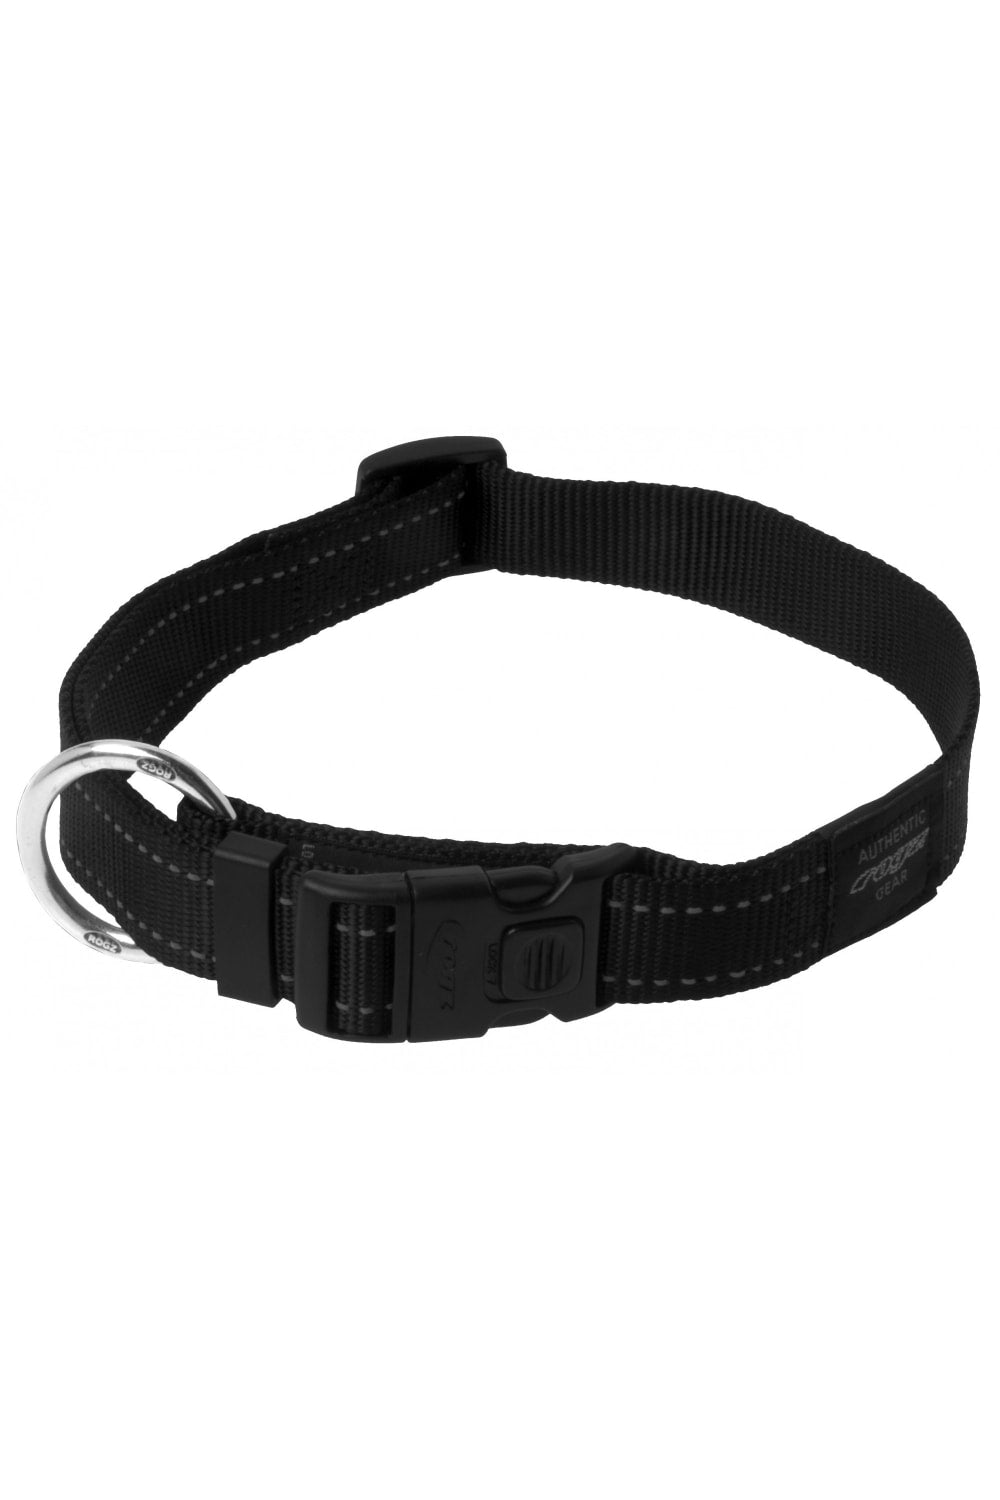 Rogz Utility Side Release Adjustable Dog Collar (Black) (Extra Large)